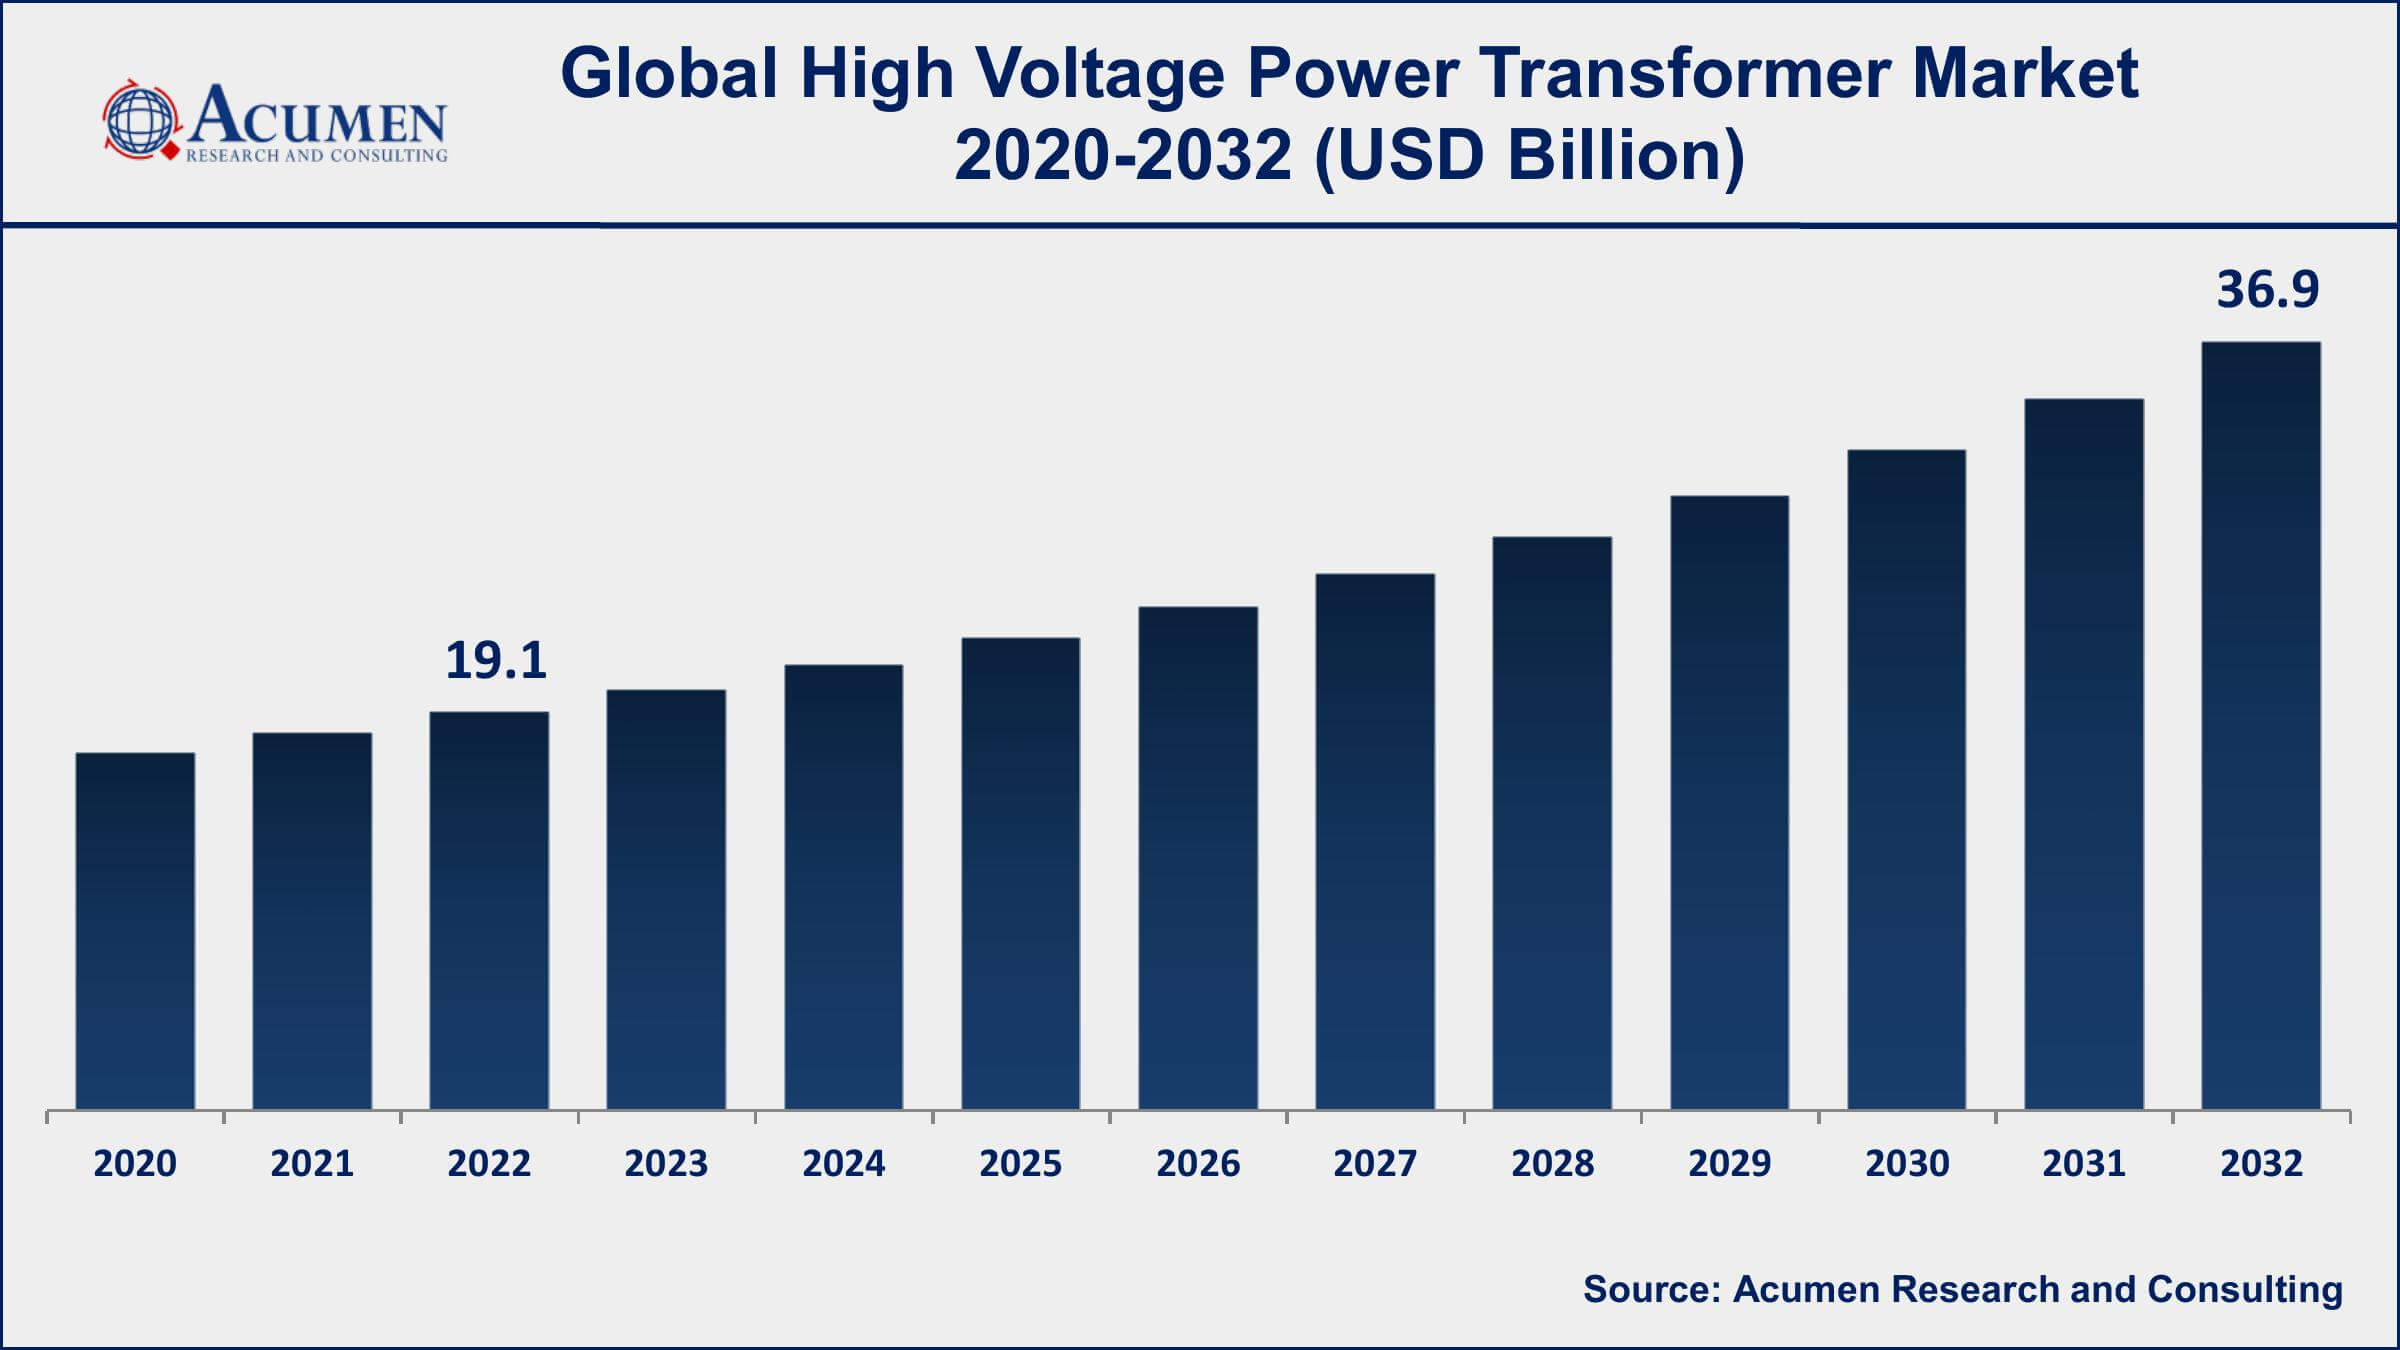 High Voltage Power Transformer Market Drivers